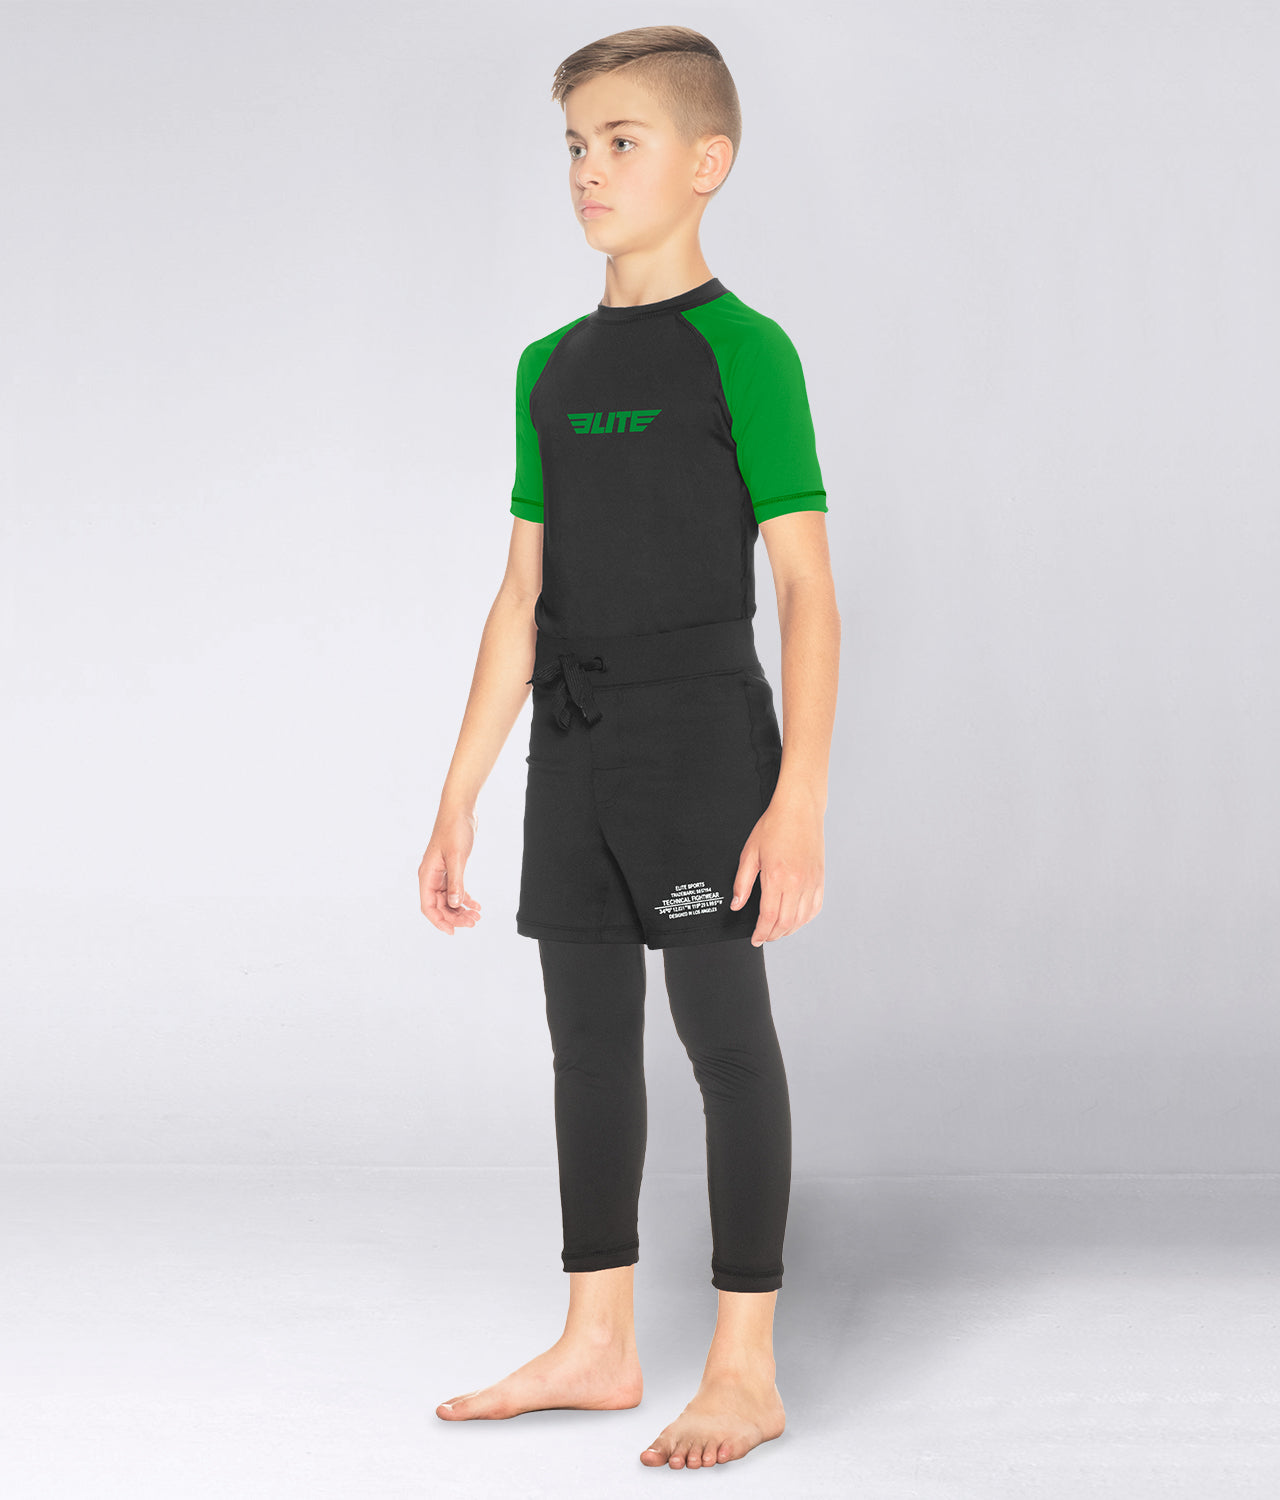 Kids' Standard Green Short Sleeve Wrestling Rash Guard 